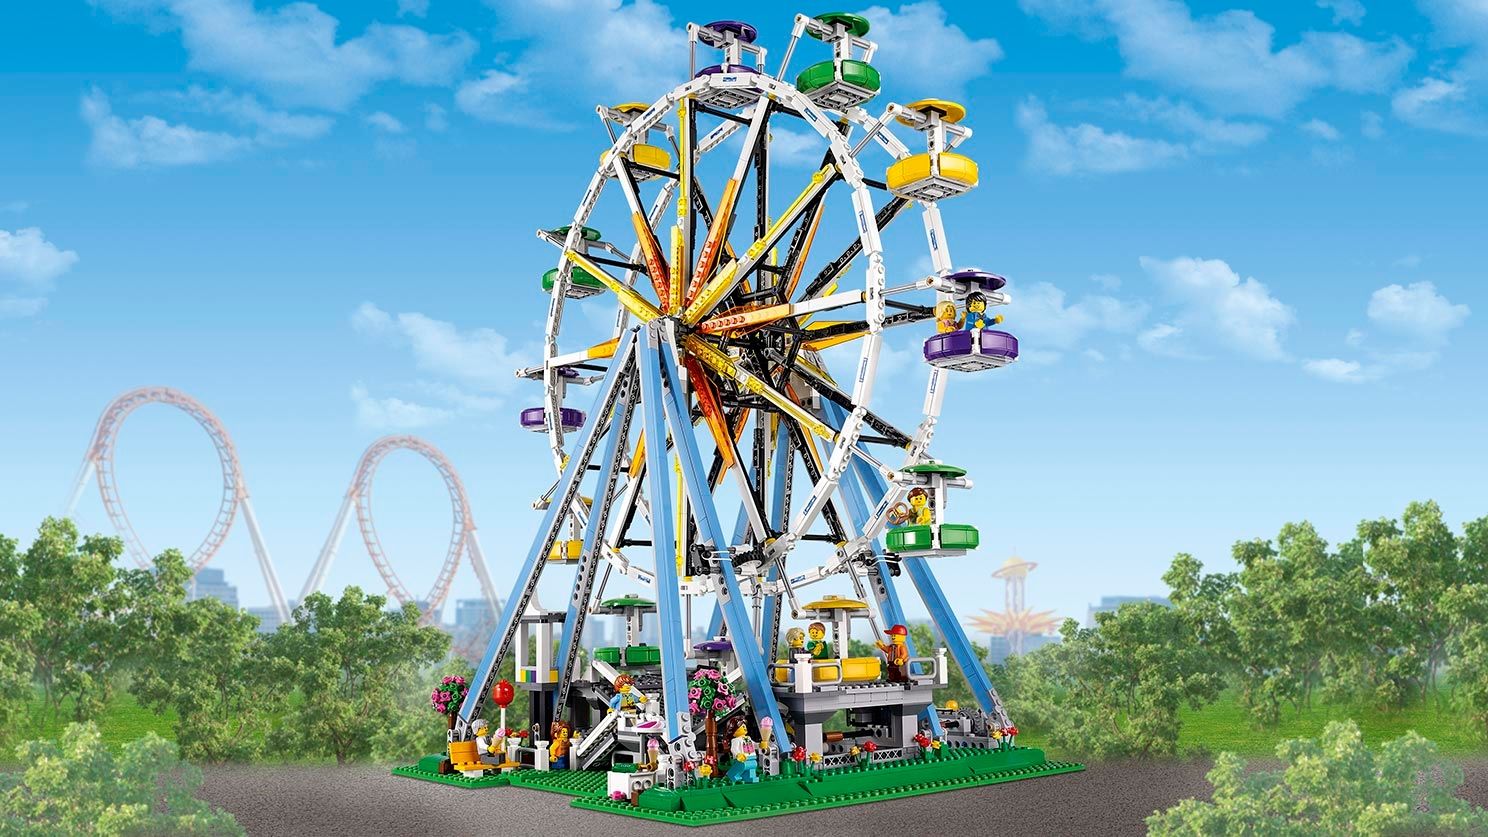 LEGO Advanced Models 10247 Riesenrad (Ferris Wheel) LEGO_10247_PROD_DET06_1488.jpg